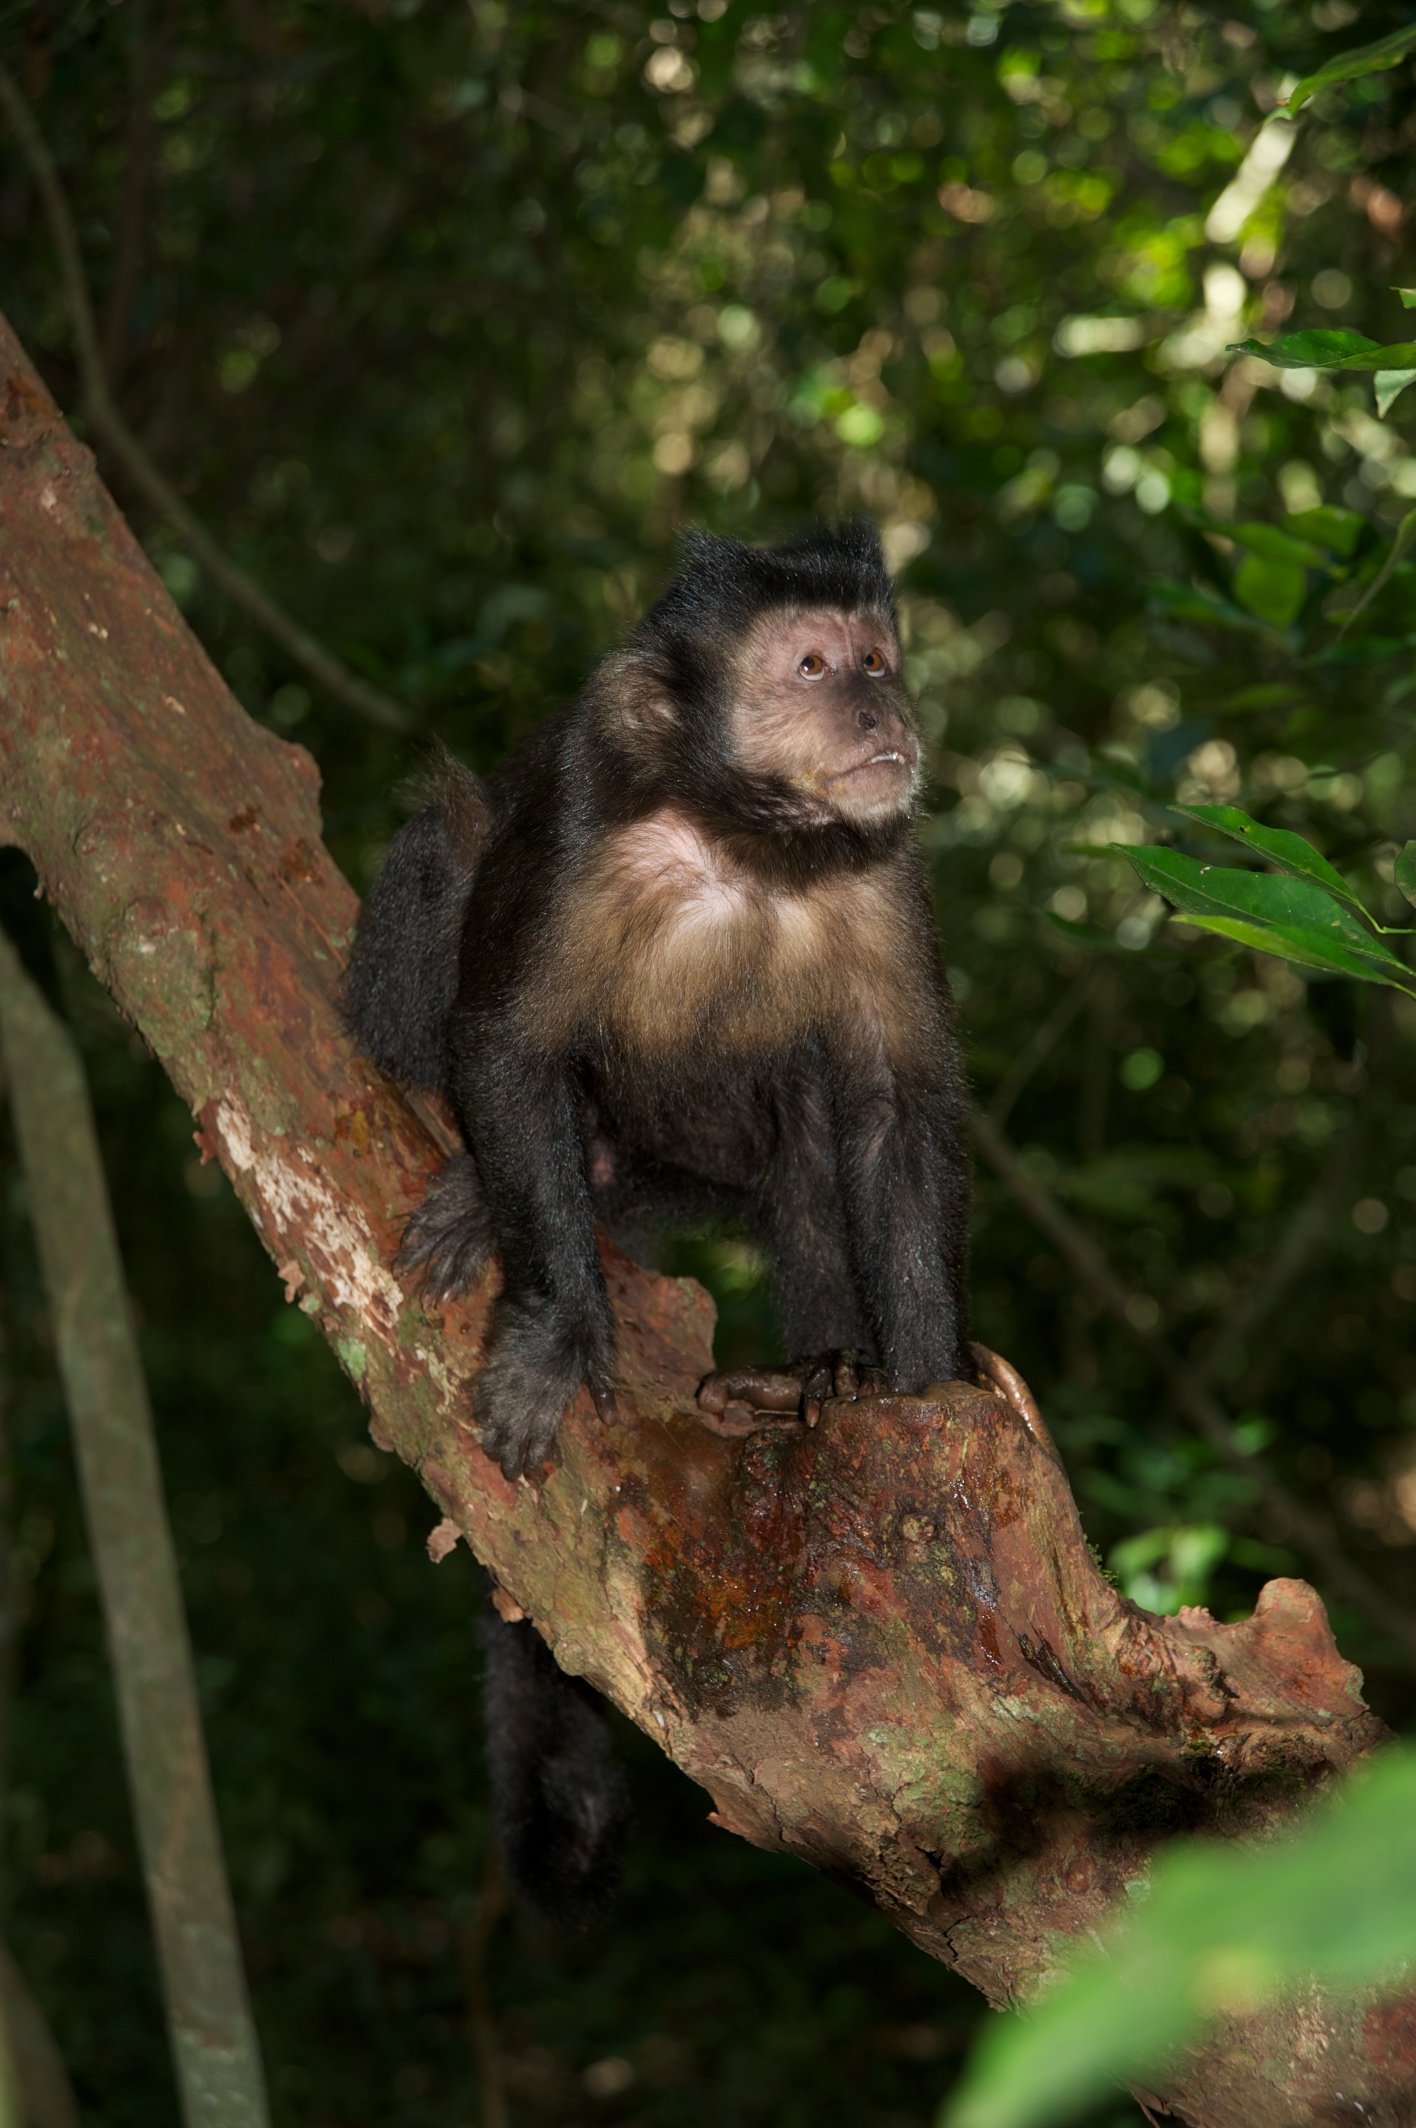  Monkey at Iguazu Falls, Argentina 